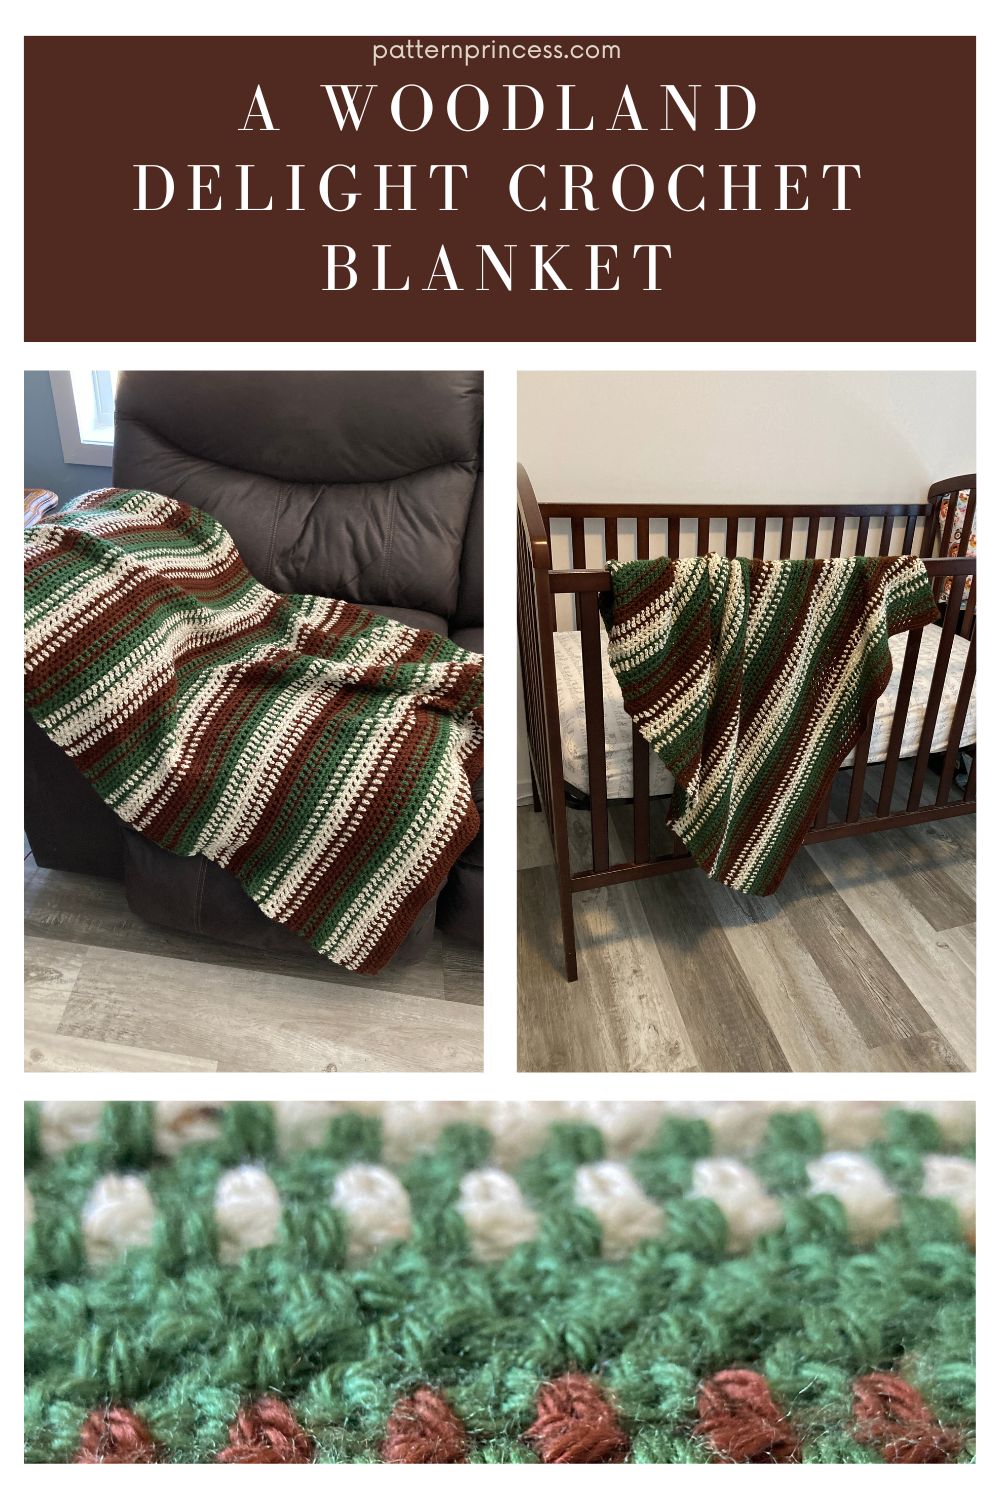 A Woodland Delight crochet blanket